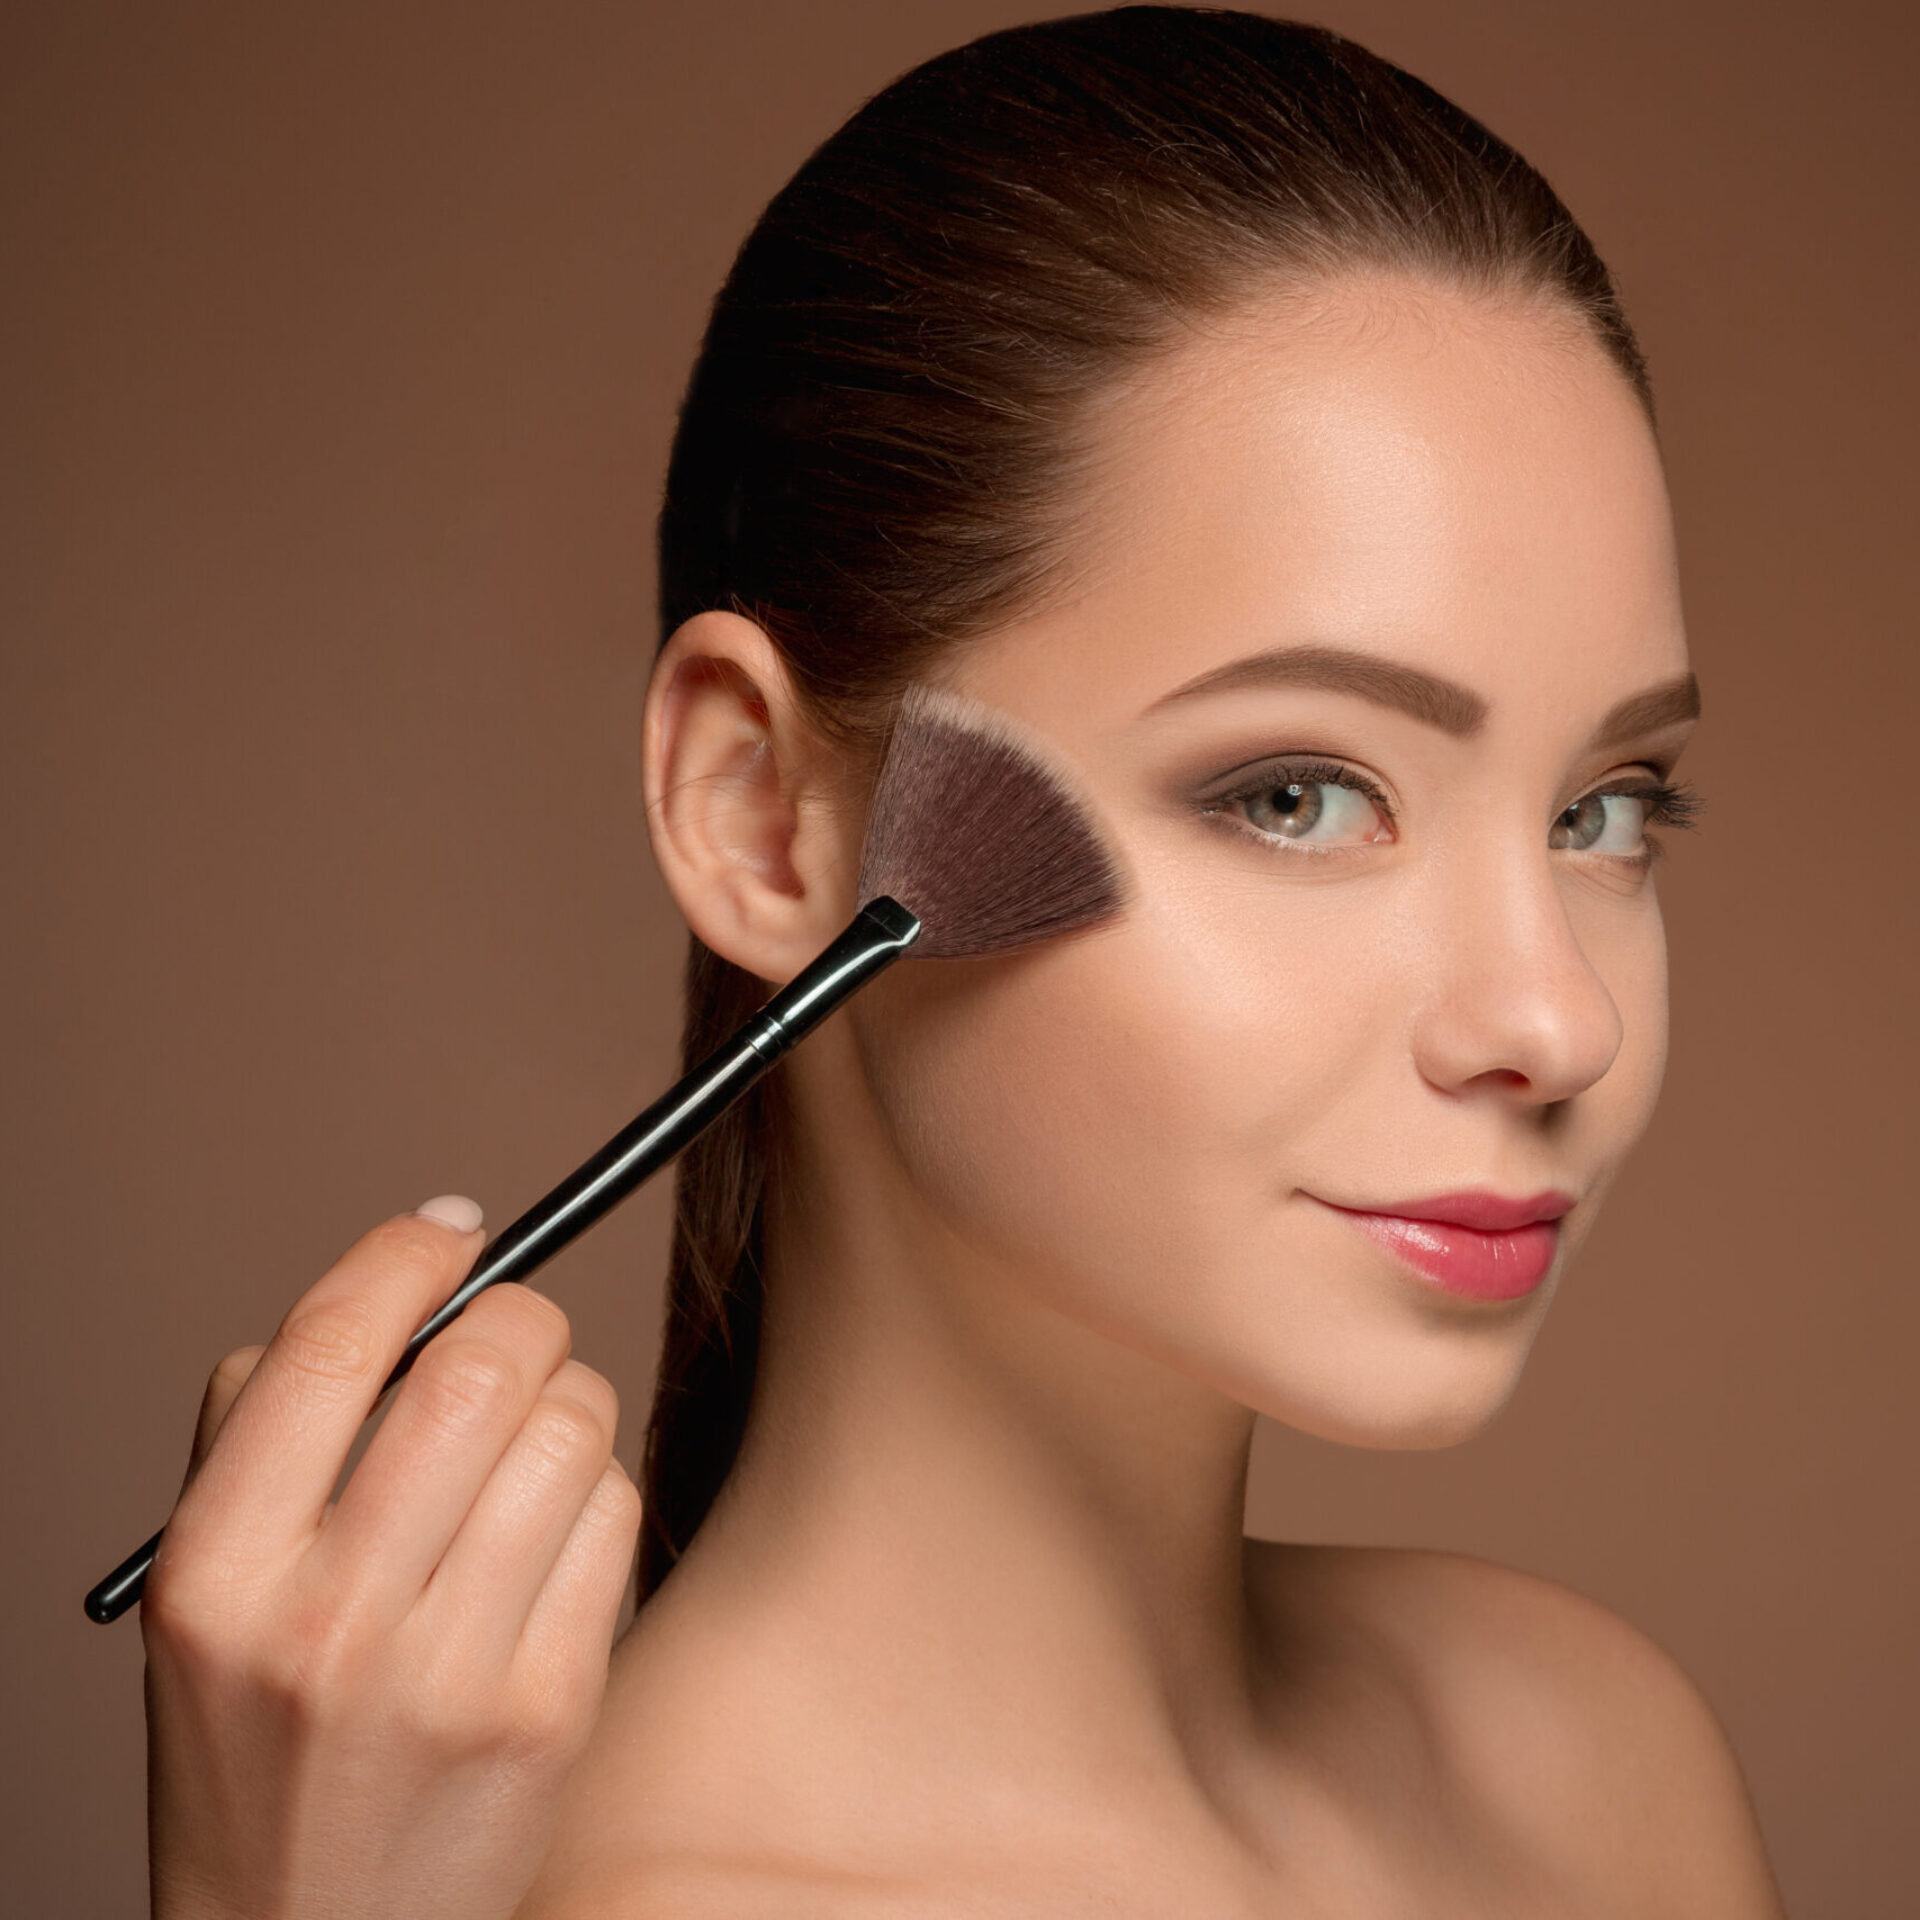 Beauty Girl with Makeup Brush. Perfect Skin. Applying Makeup